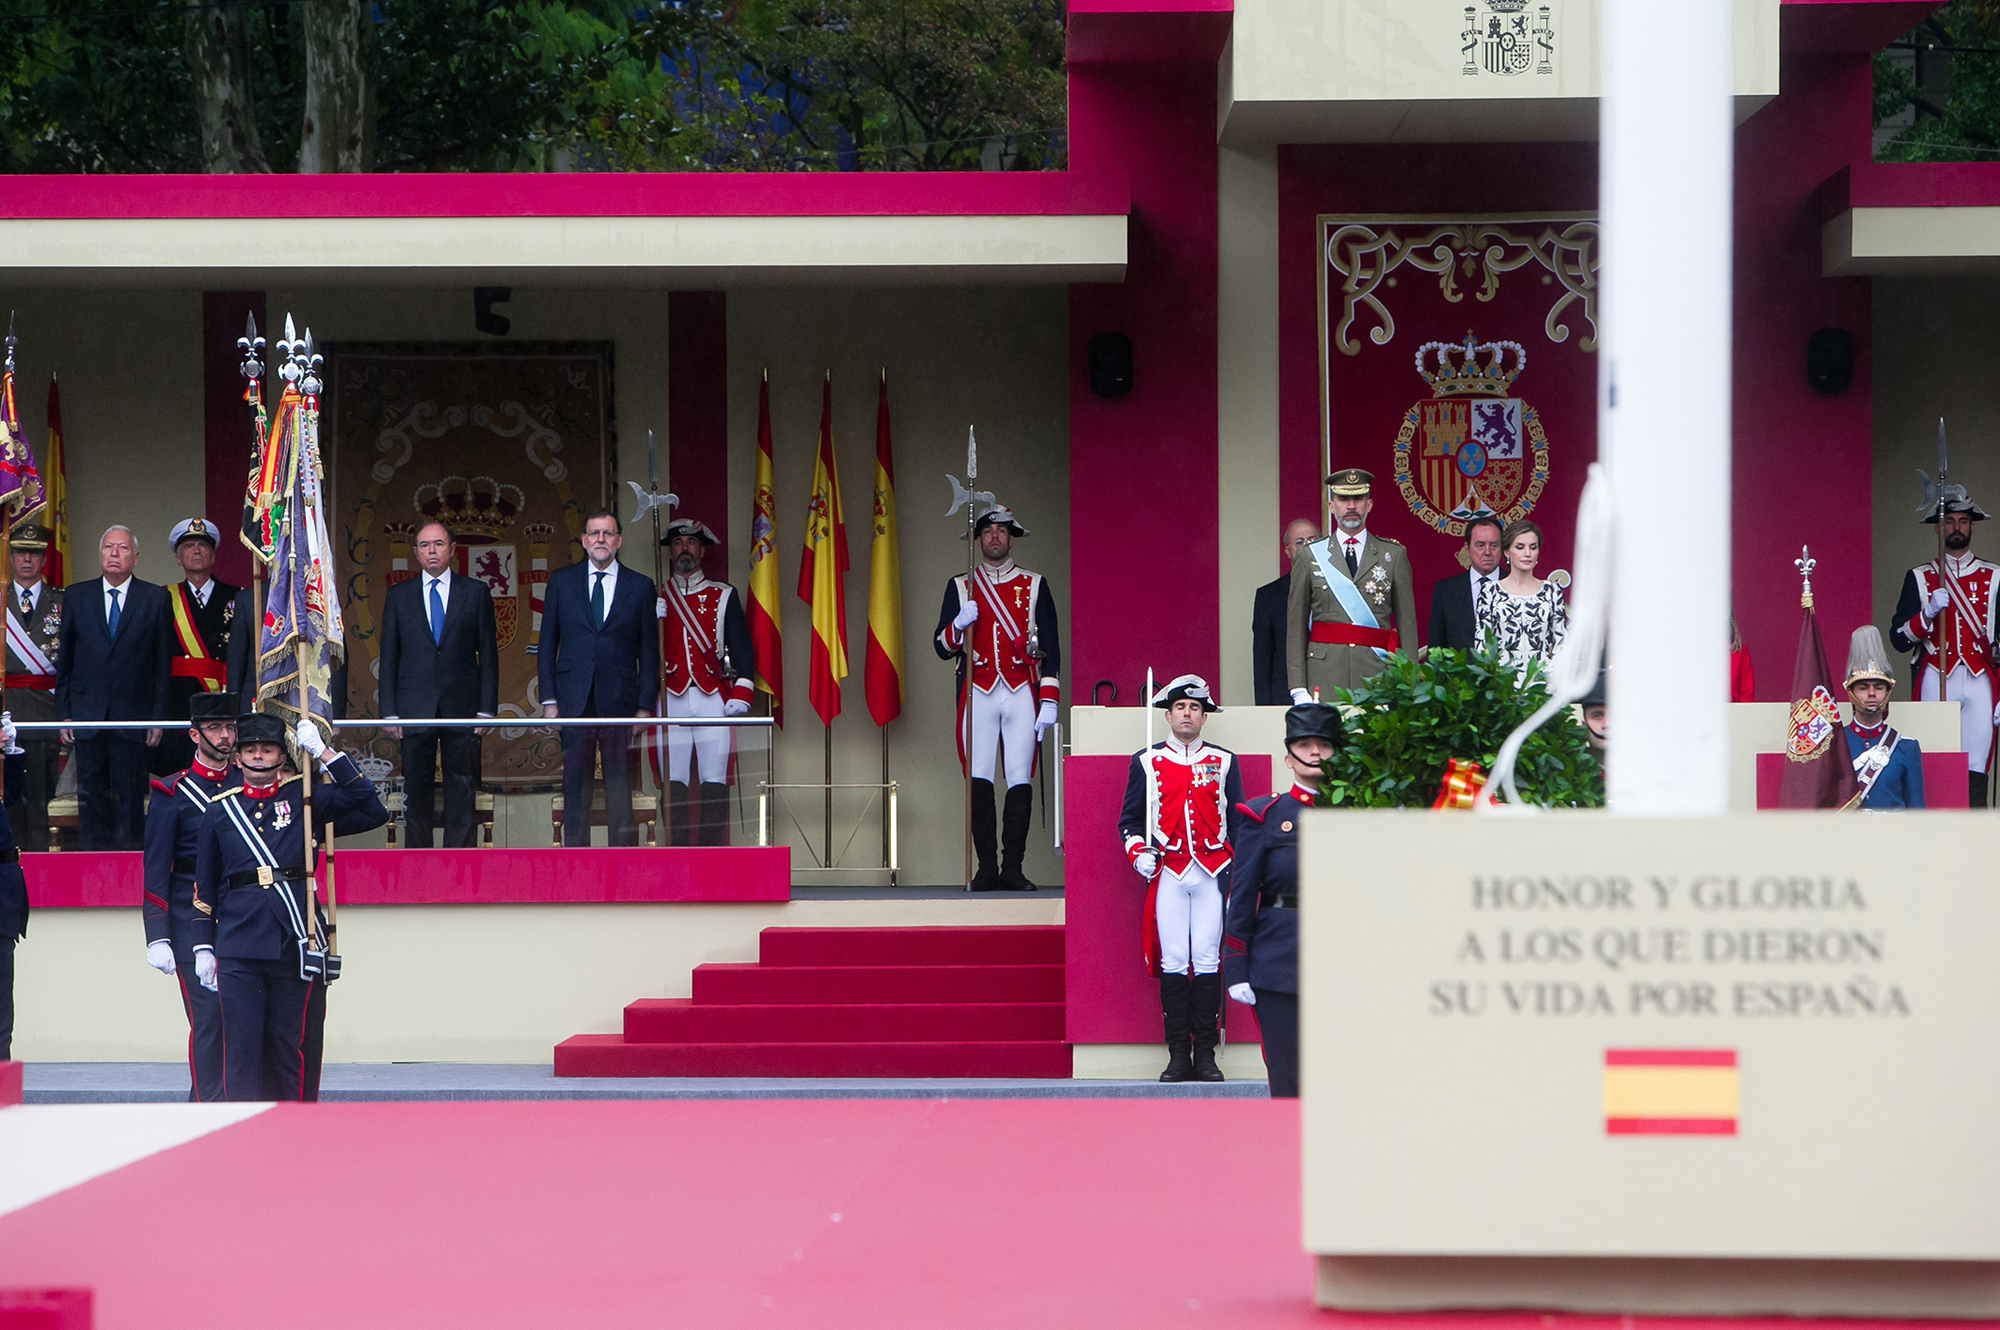 Spain's 2016 National Day celebration